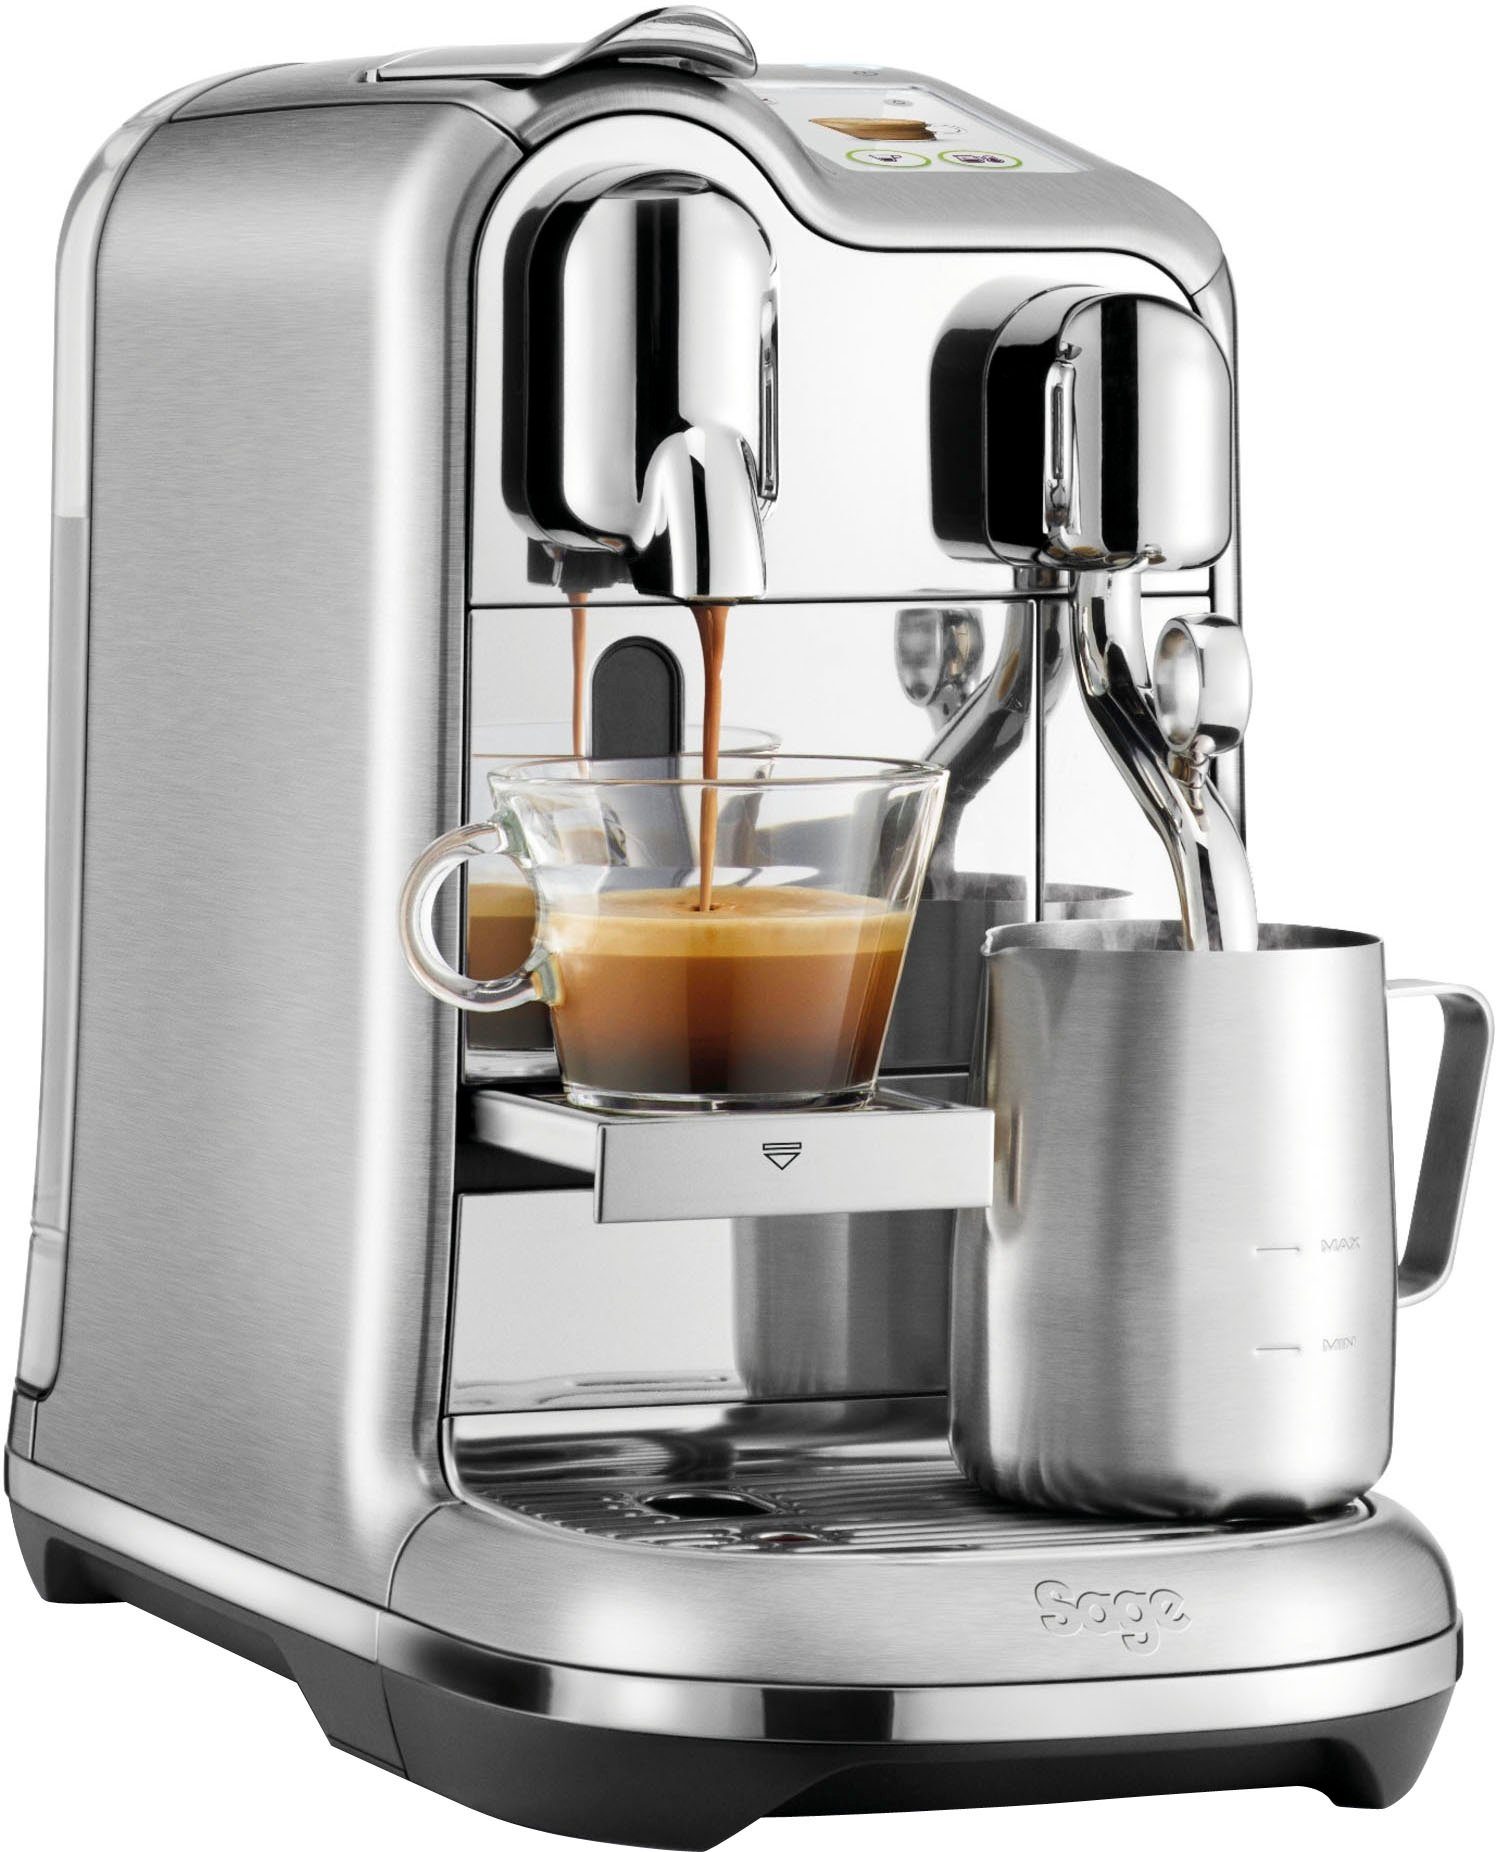 Nespresso Kapselmaschine Creatista Pro SNE900 mit Edelstahl-Milchkanne, inkl. Willkommenspaket mit 14 Kapseln | Kapselmaschinen